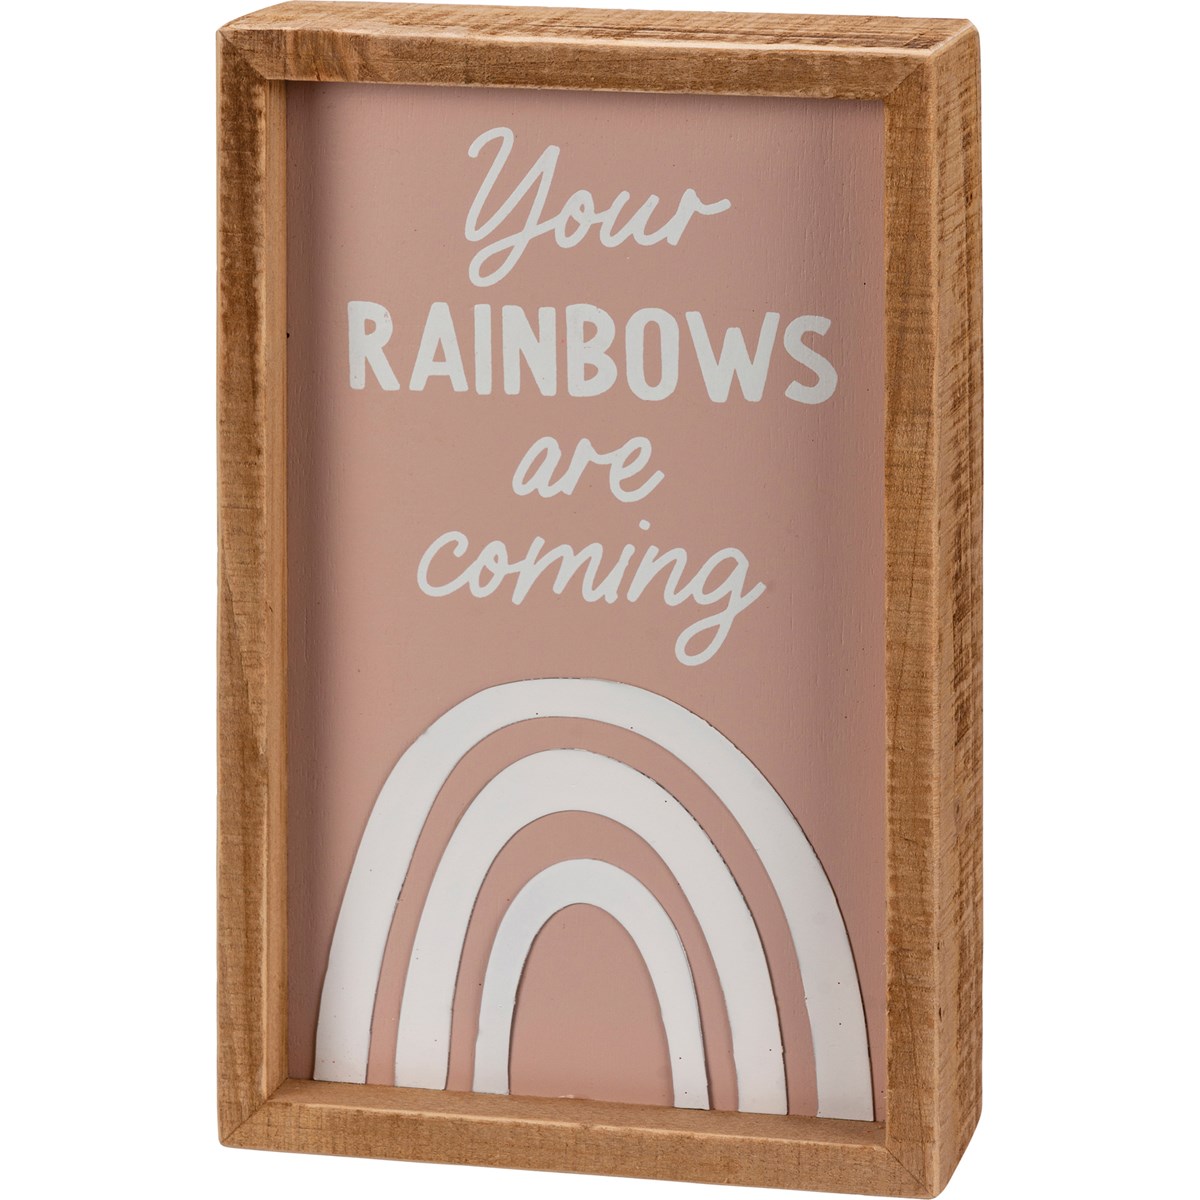 Rainbows Inset Box Sign - Wood, Metal